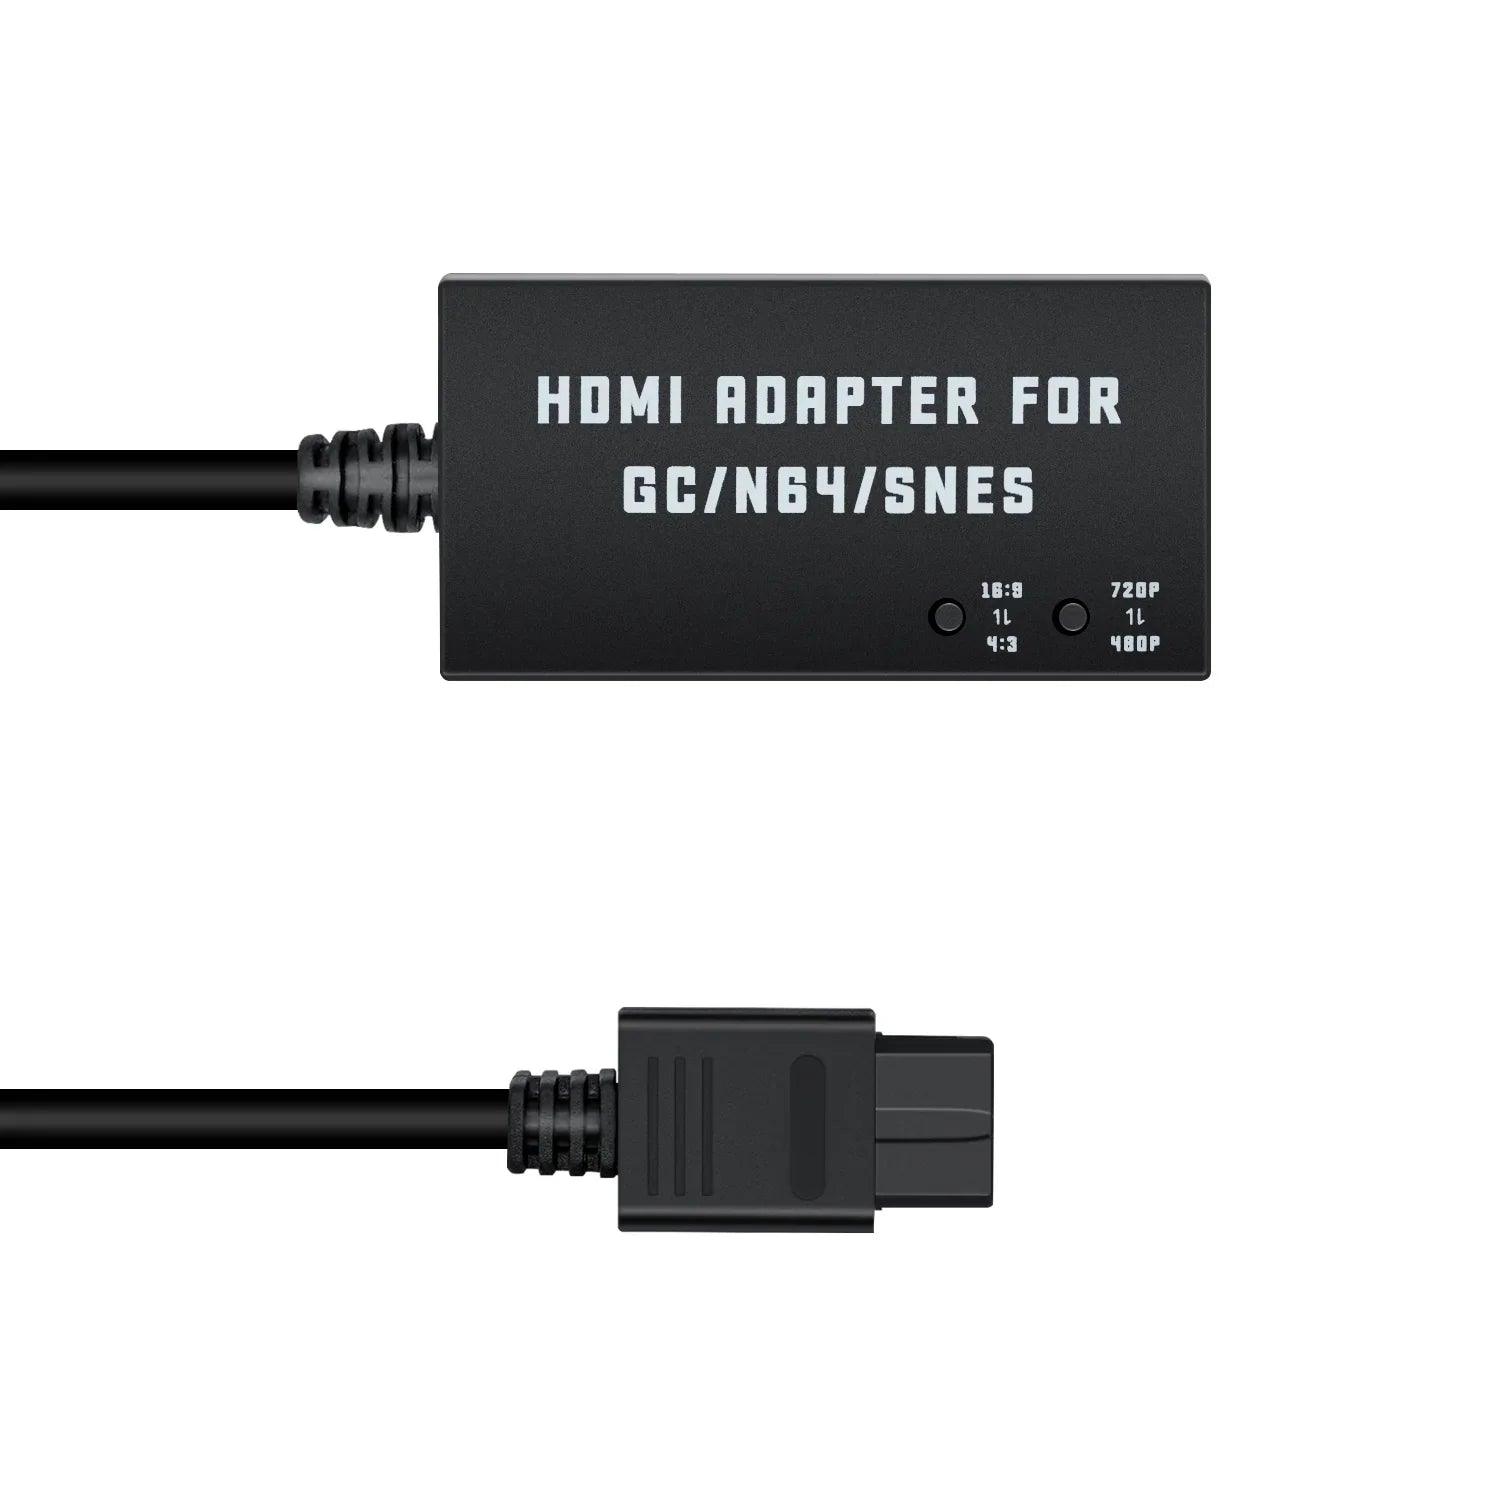 HDTV HDMI Adapter for Nintendo Gamecube/N64/SNES - RetroGaming.No